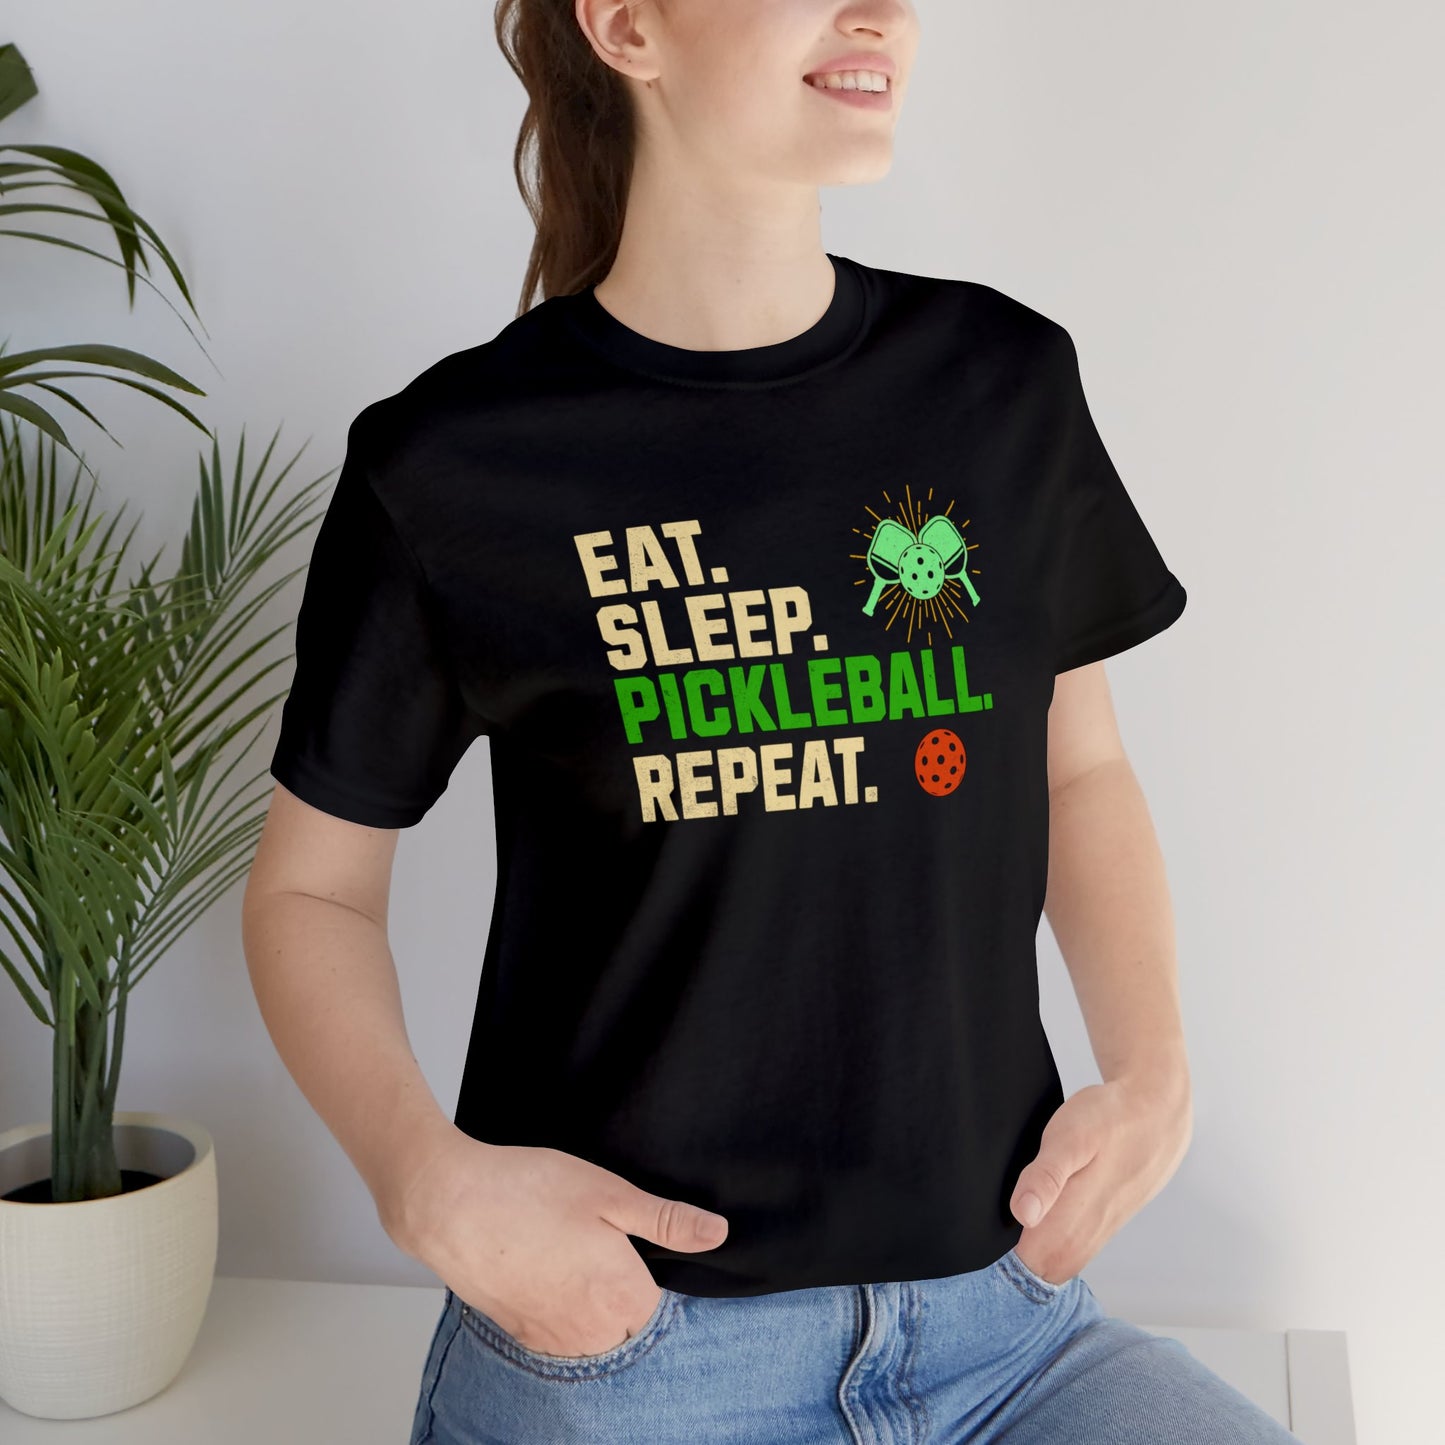 Eat. Sleep. Pickleball. Repeat. Pickleball Lifestyle Shirt